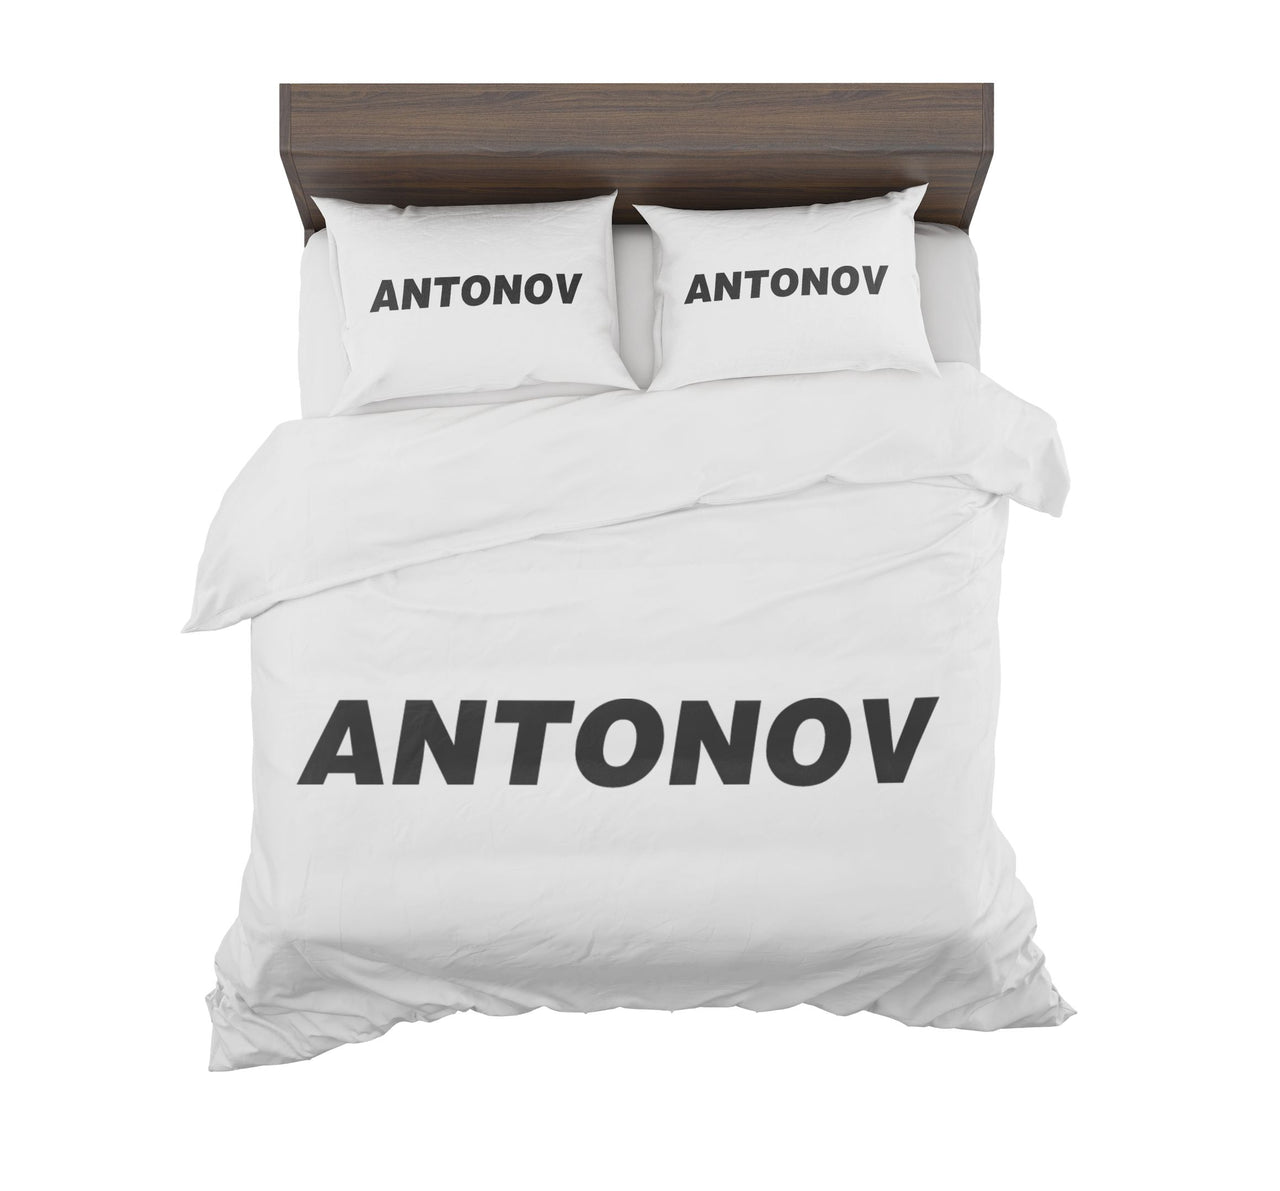 Antonov & Text Designed Bedding Sets